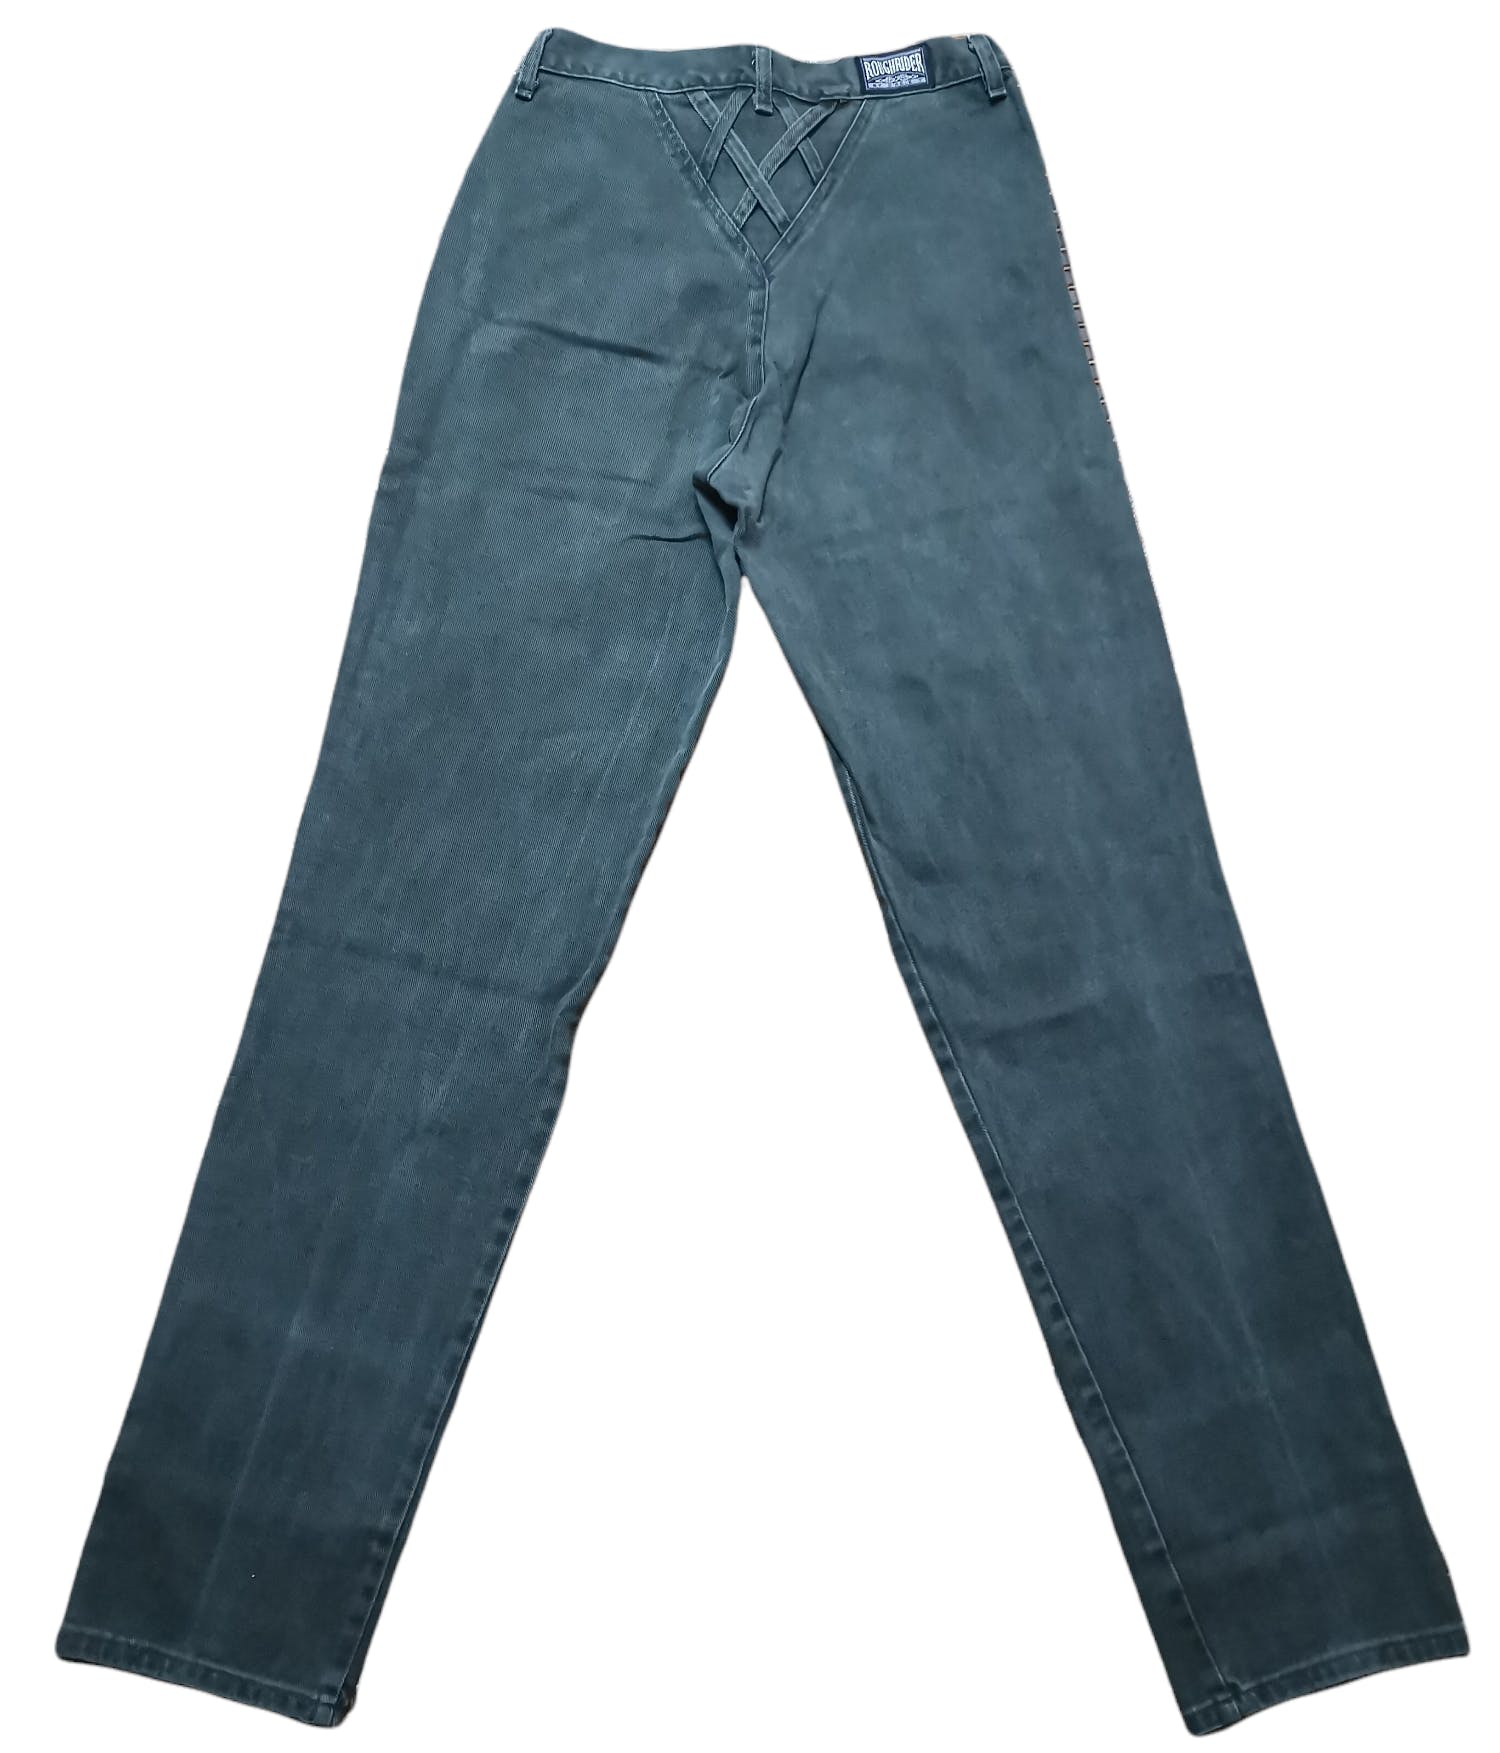 Vintage Roughrider Jeans x Talon Zipper - 2